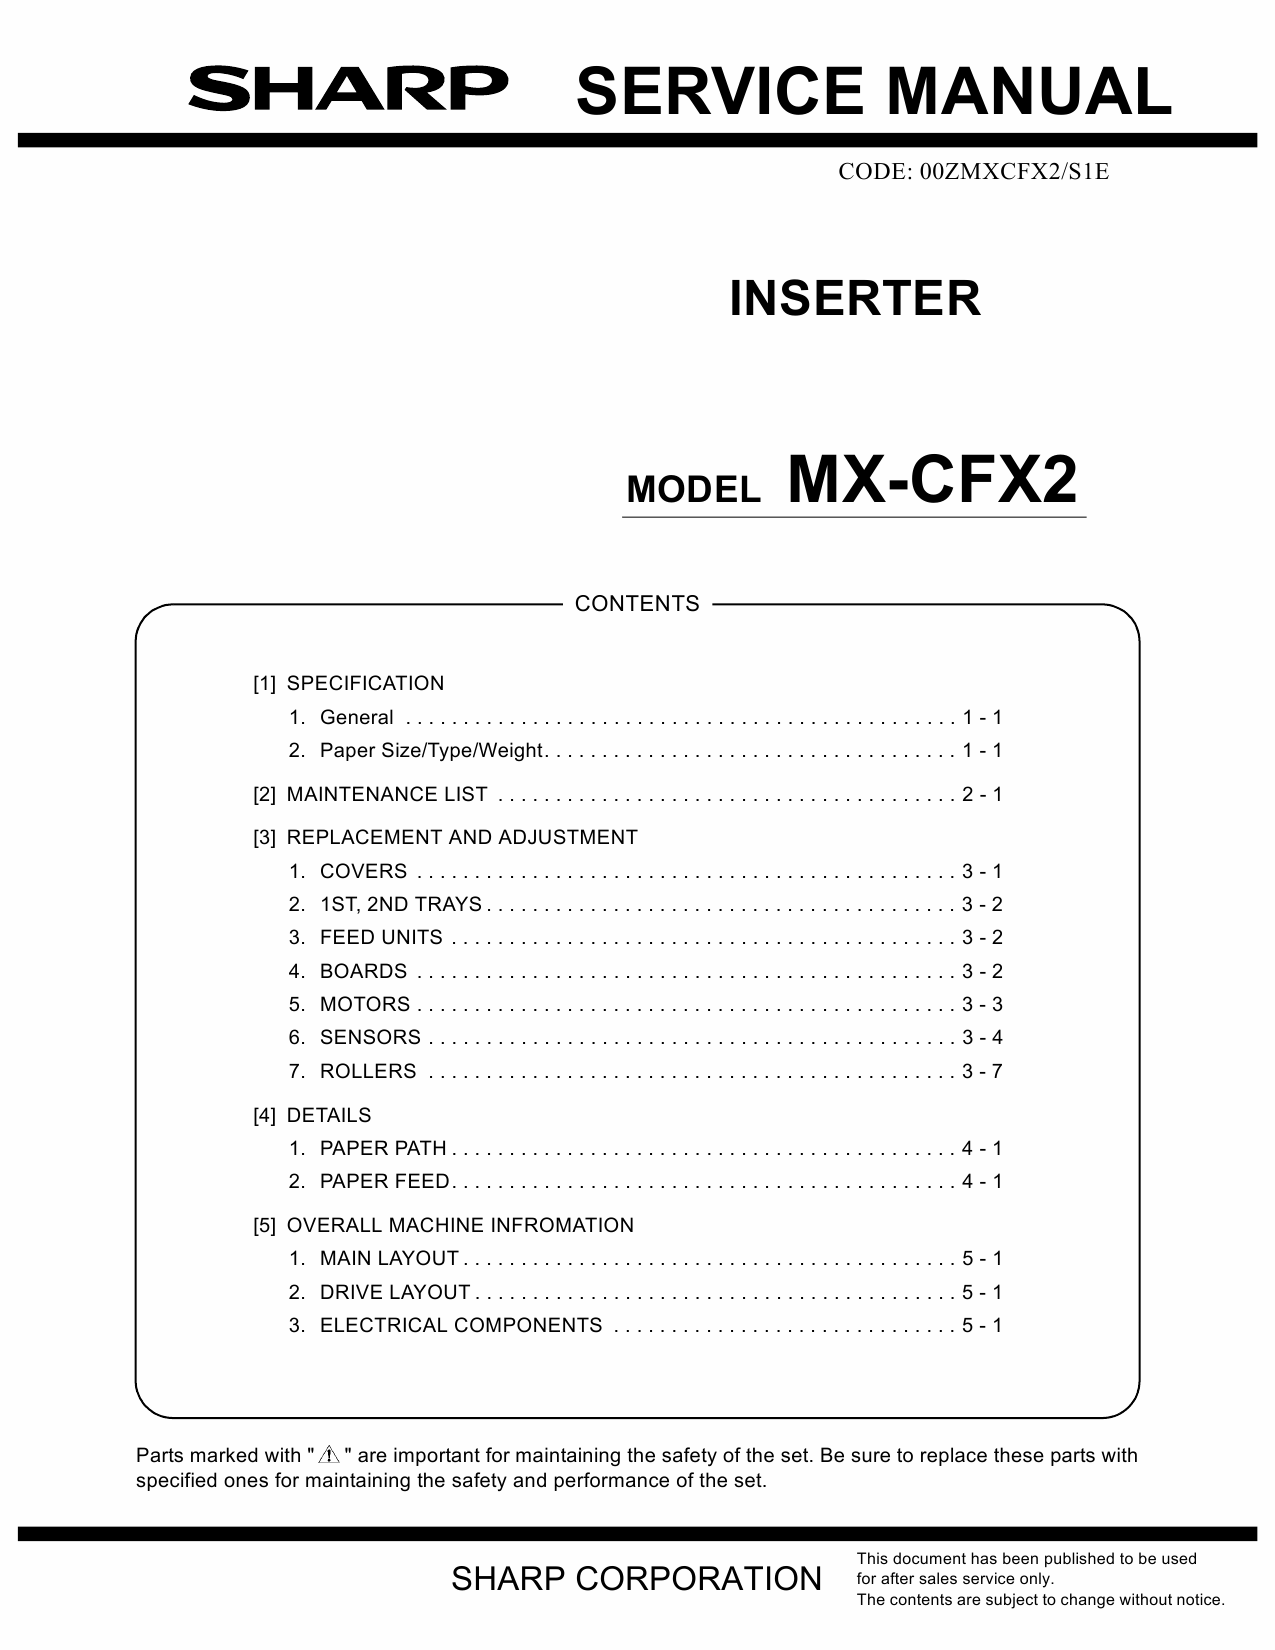 SHARP MX CFX2 Service Manual-1